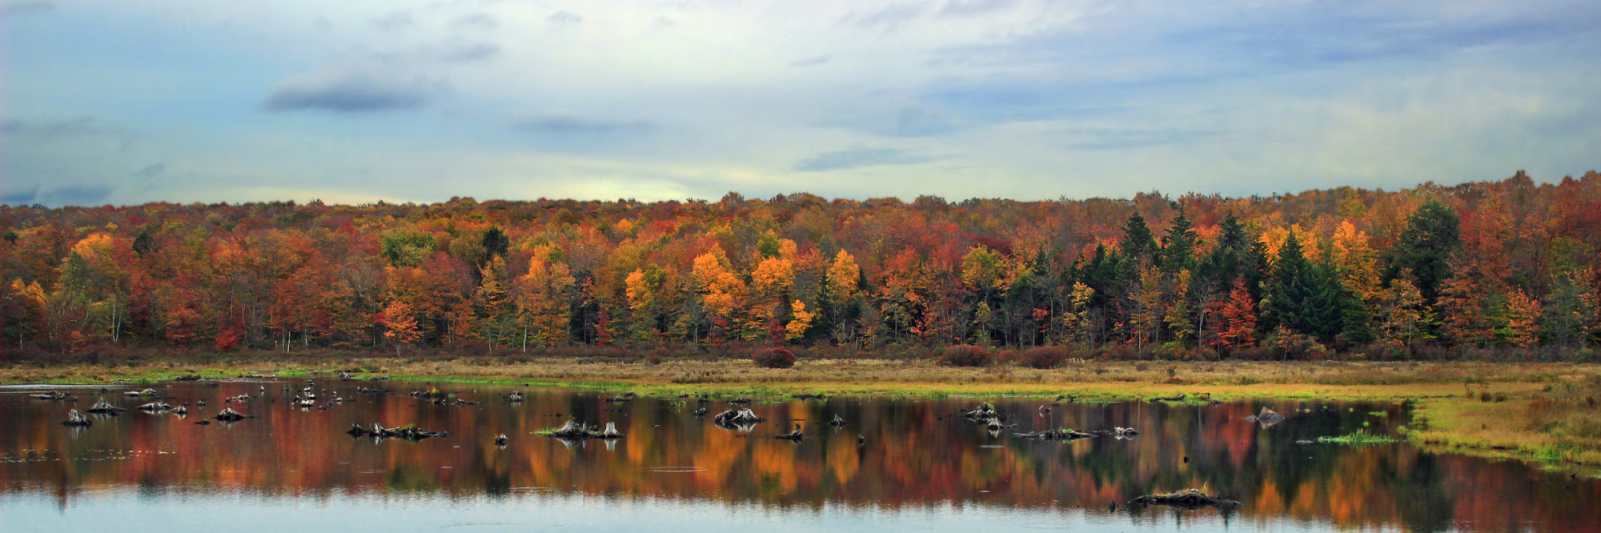 Pennsylvania Lake reflecting fall colors from trees above. Flickr via nicholas_t Public Domain